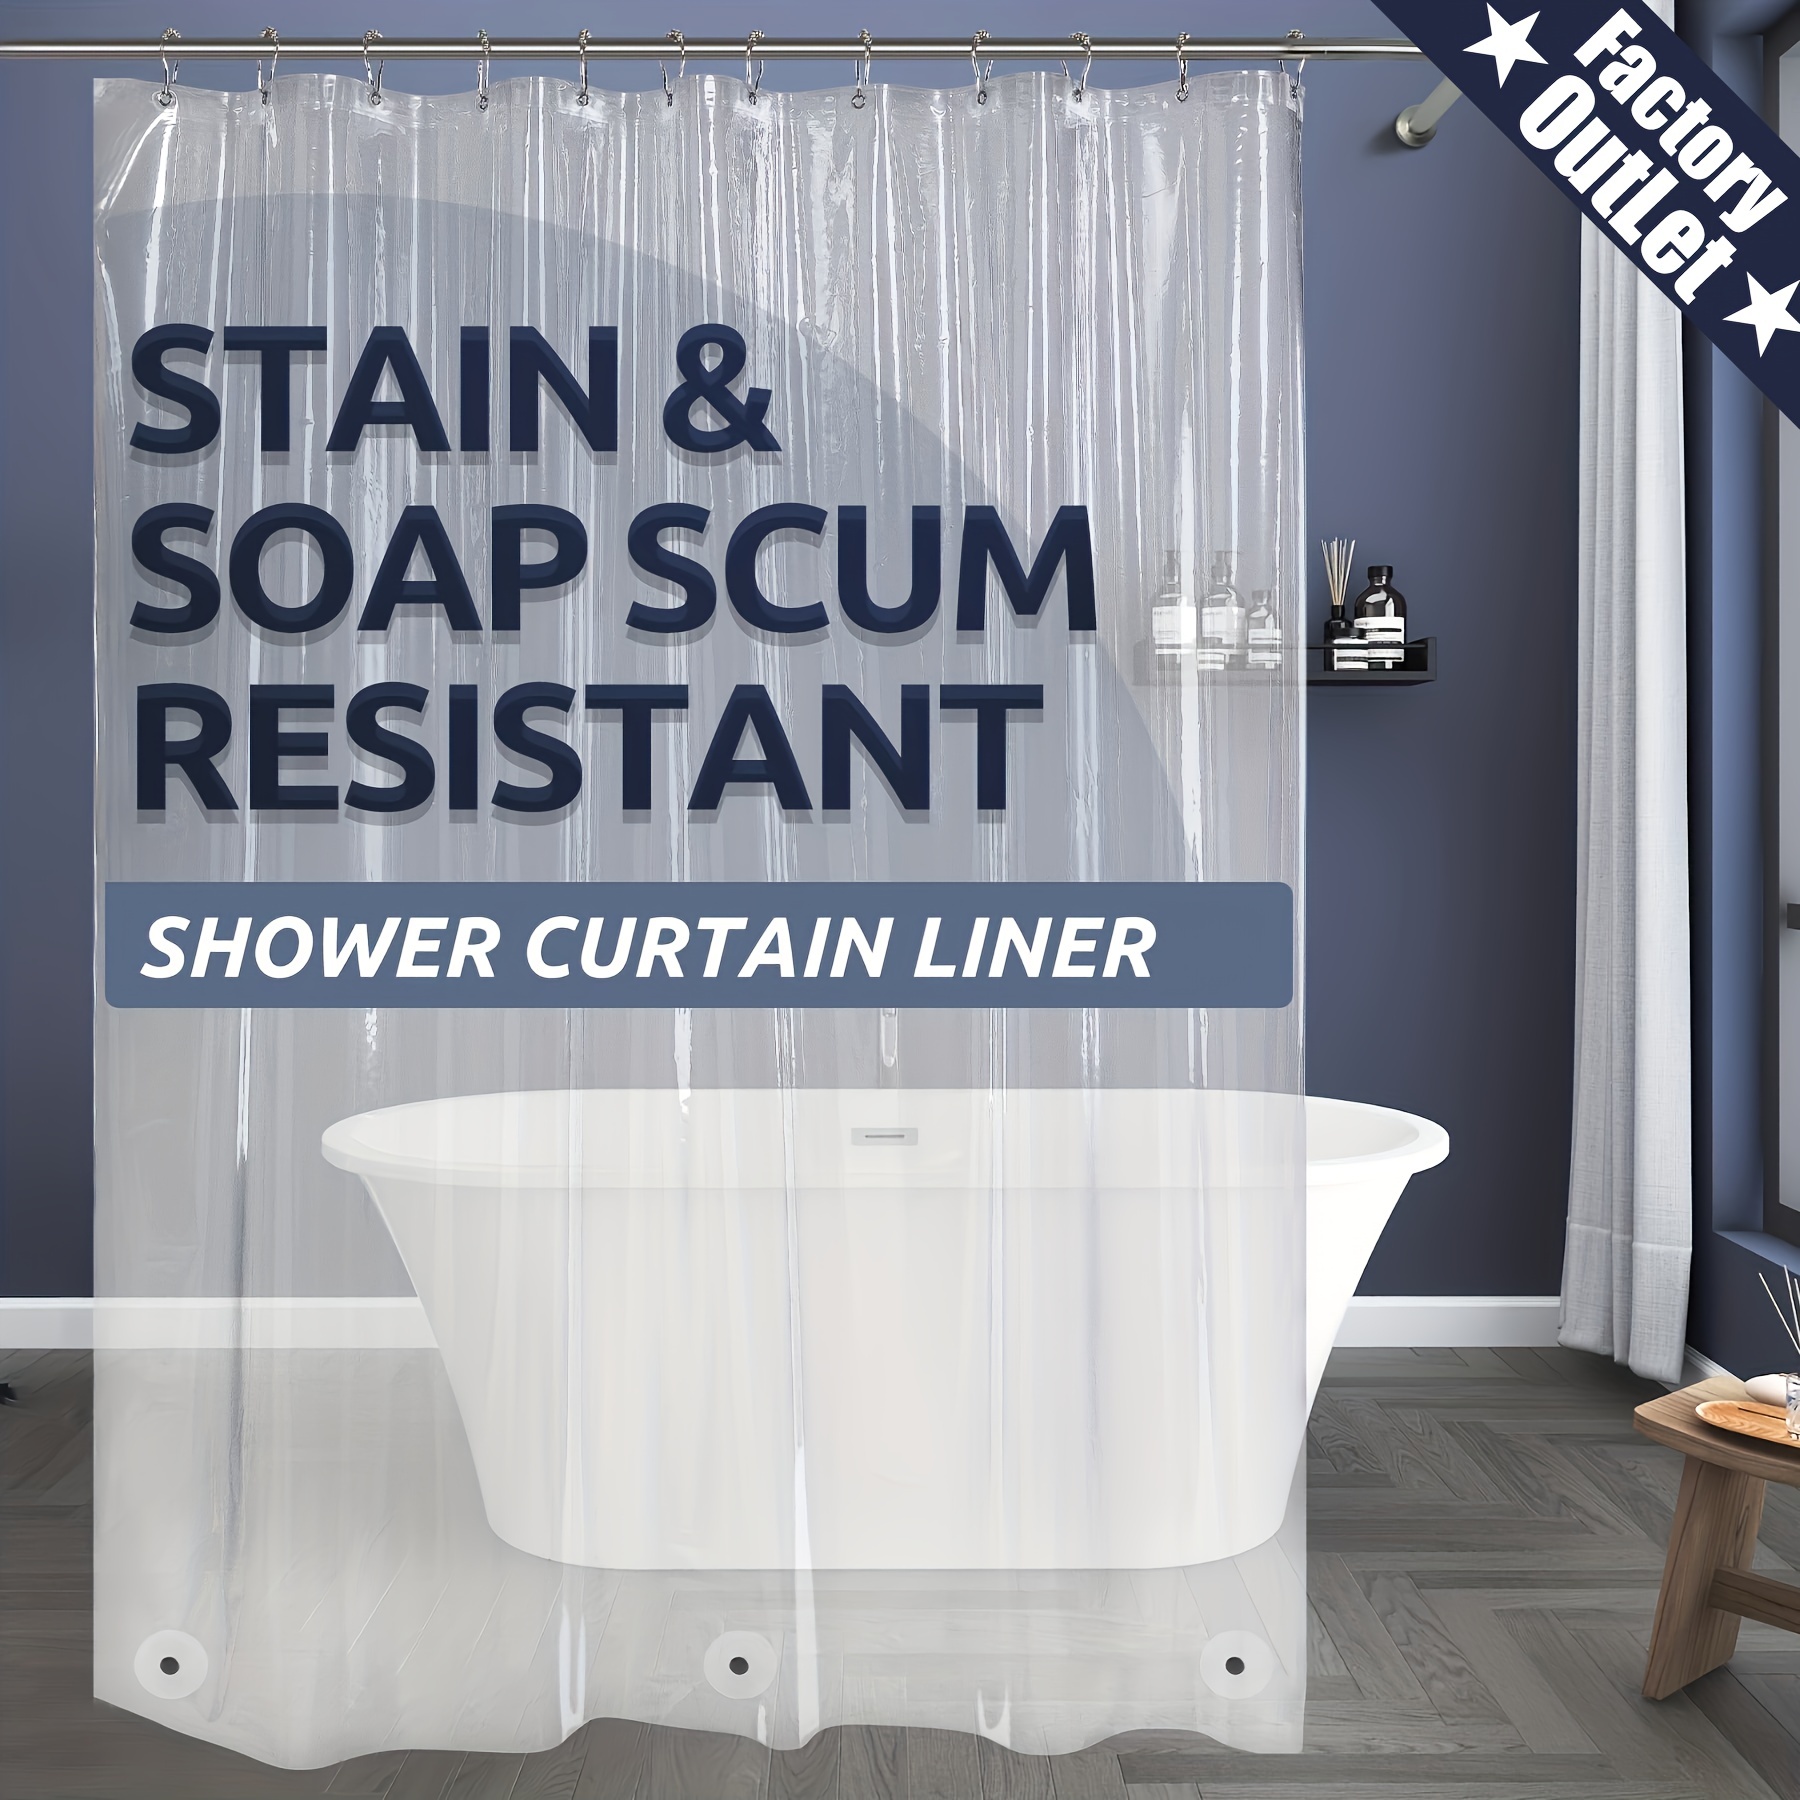 1pc Peva Waterproof Mesh Pocket Shower Curtain With Bath Storage